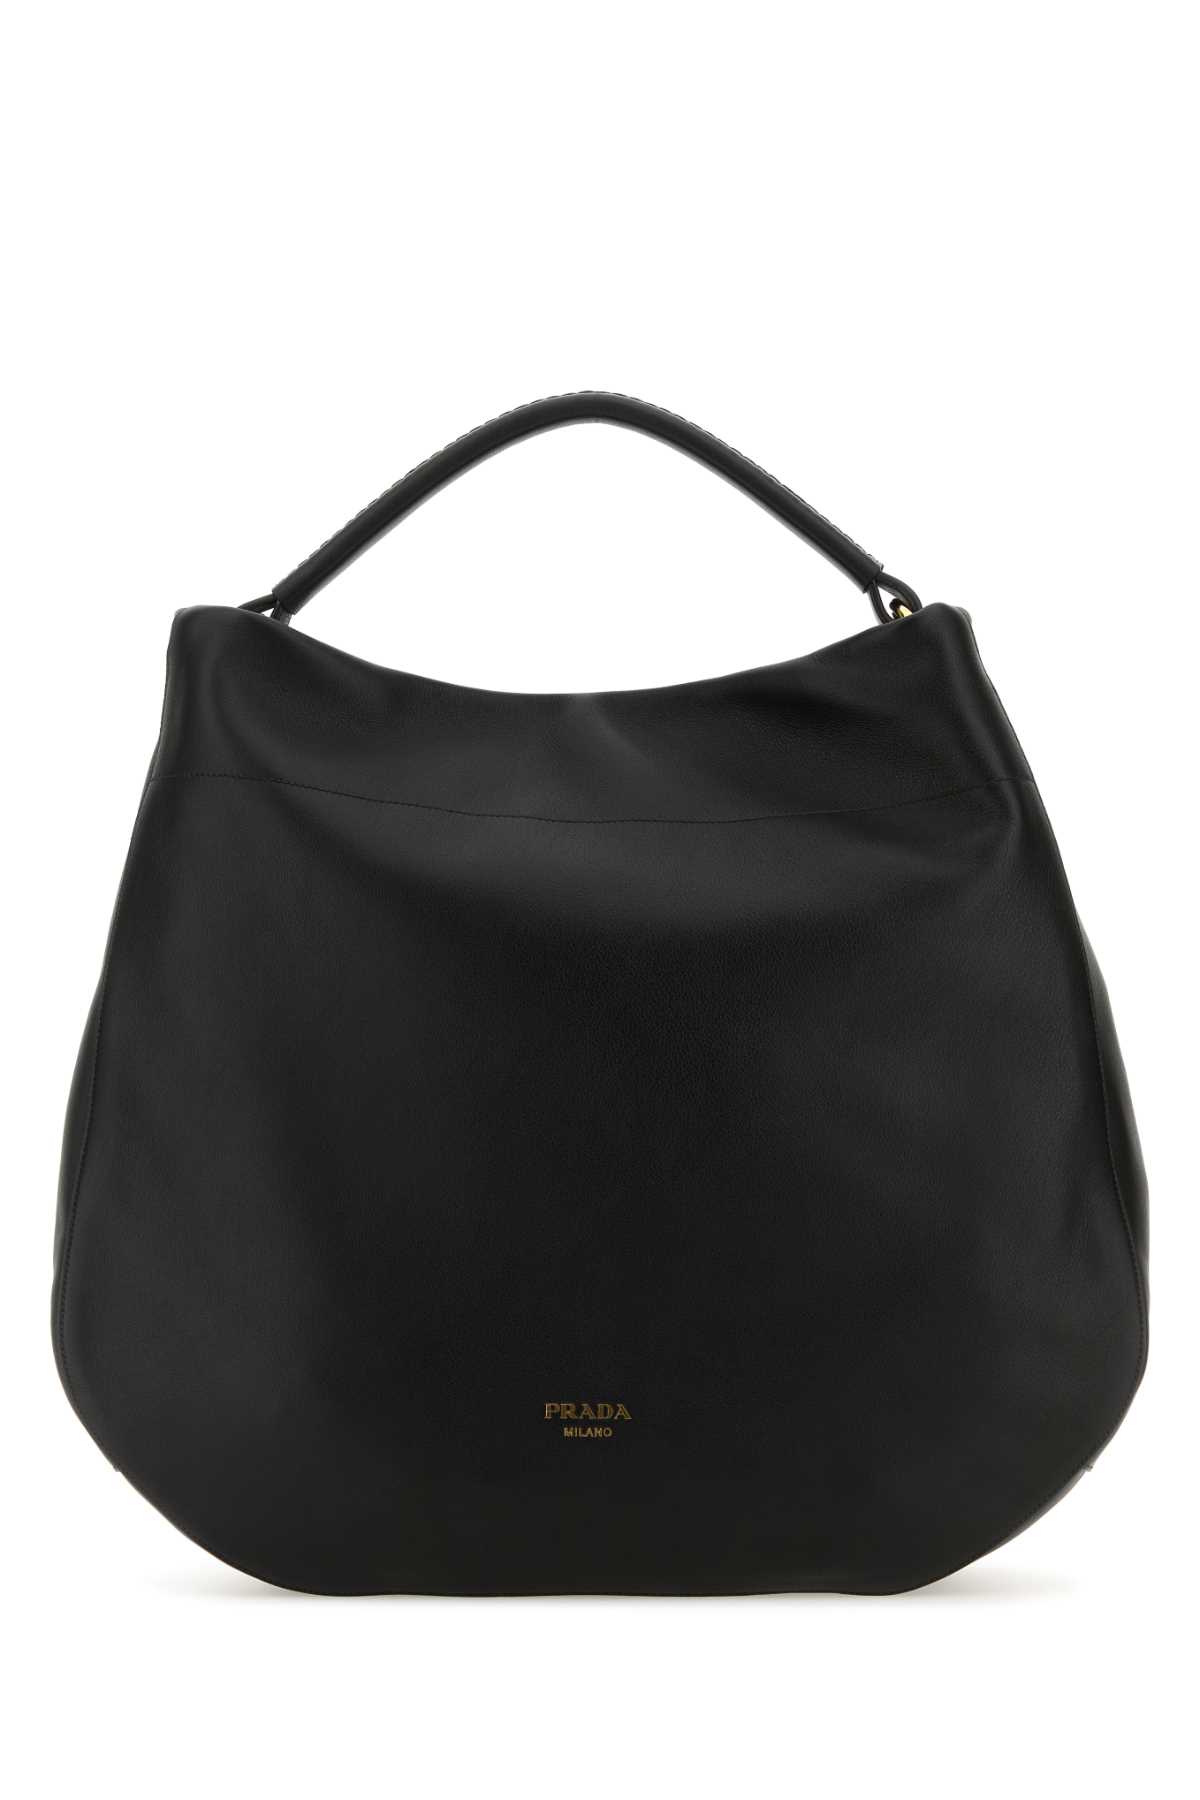 Prada Black Leather Shopping Bag